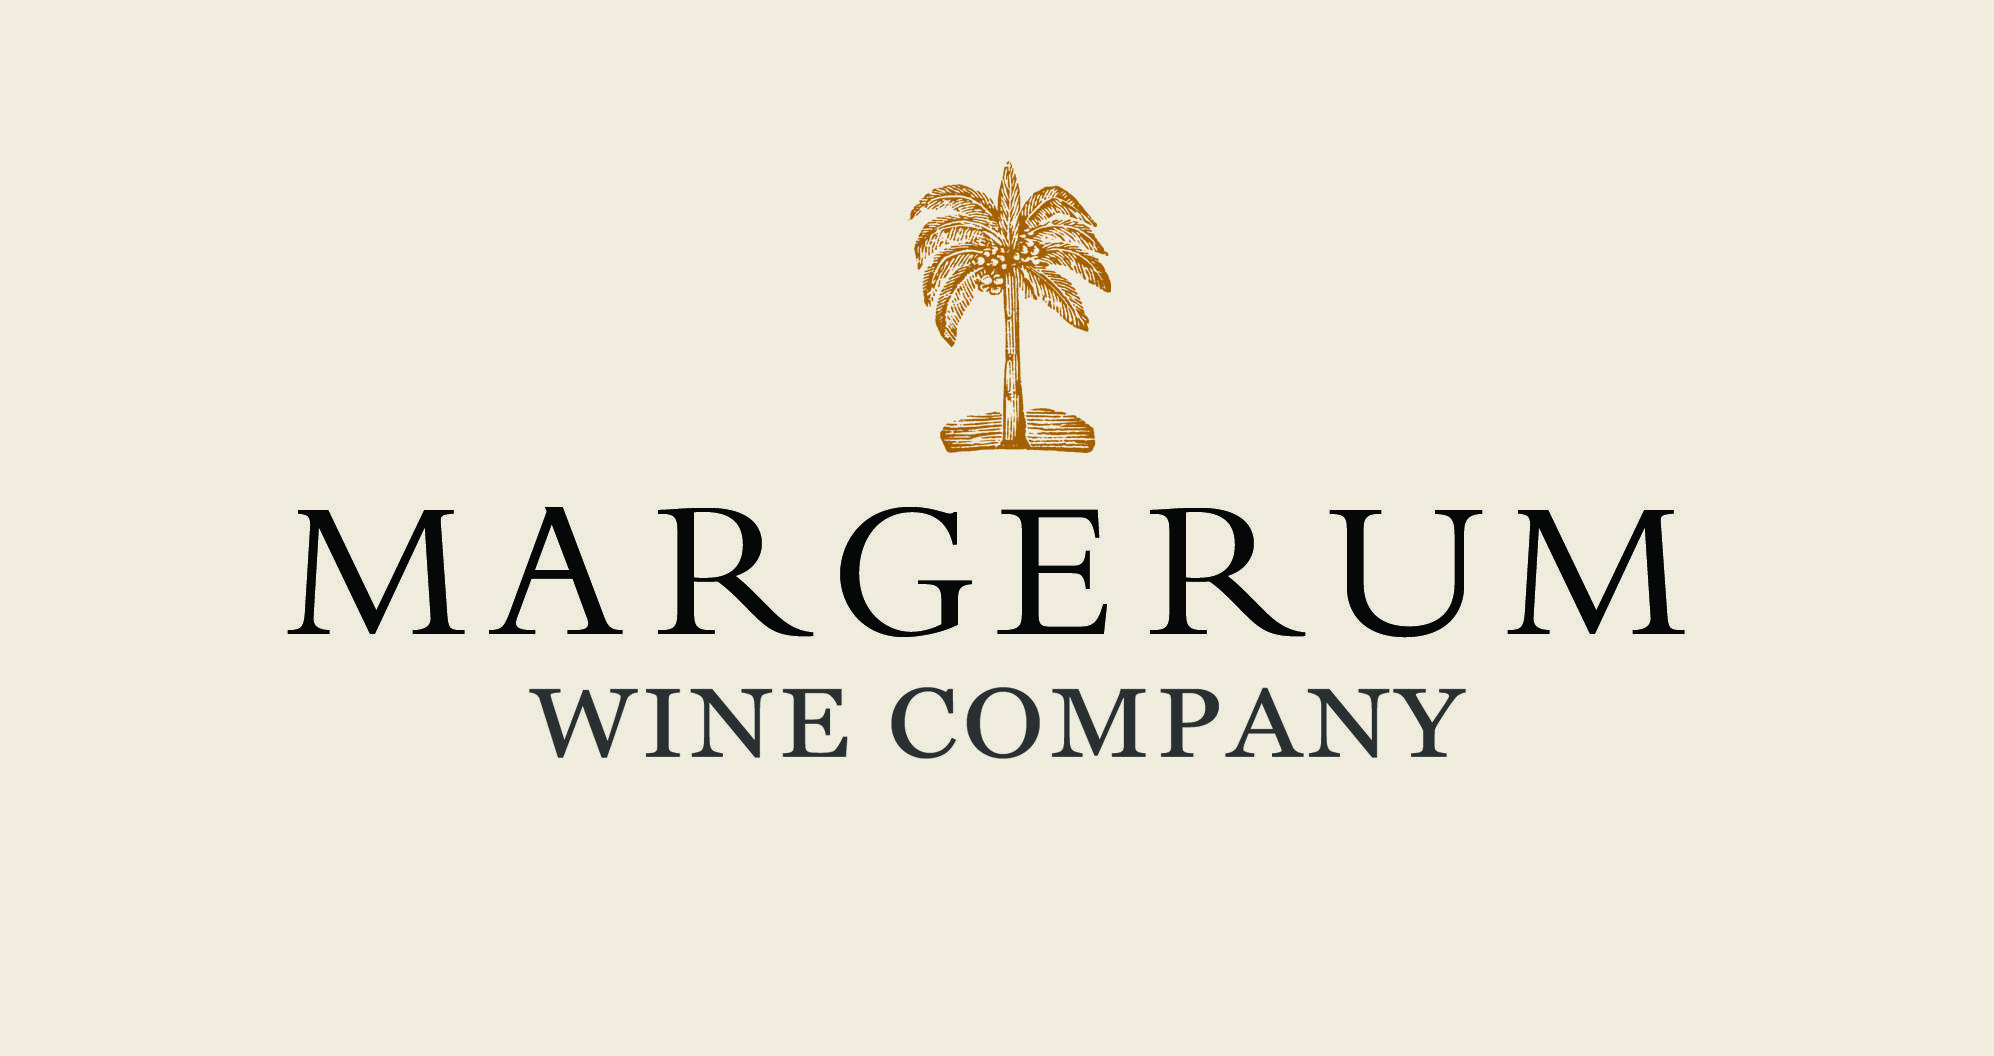 Wine Company Logo - Margerum Wine Company